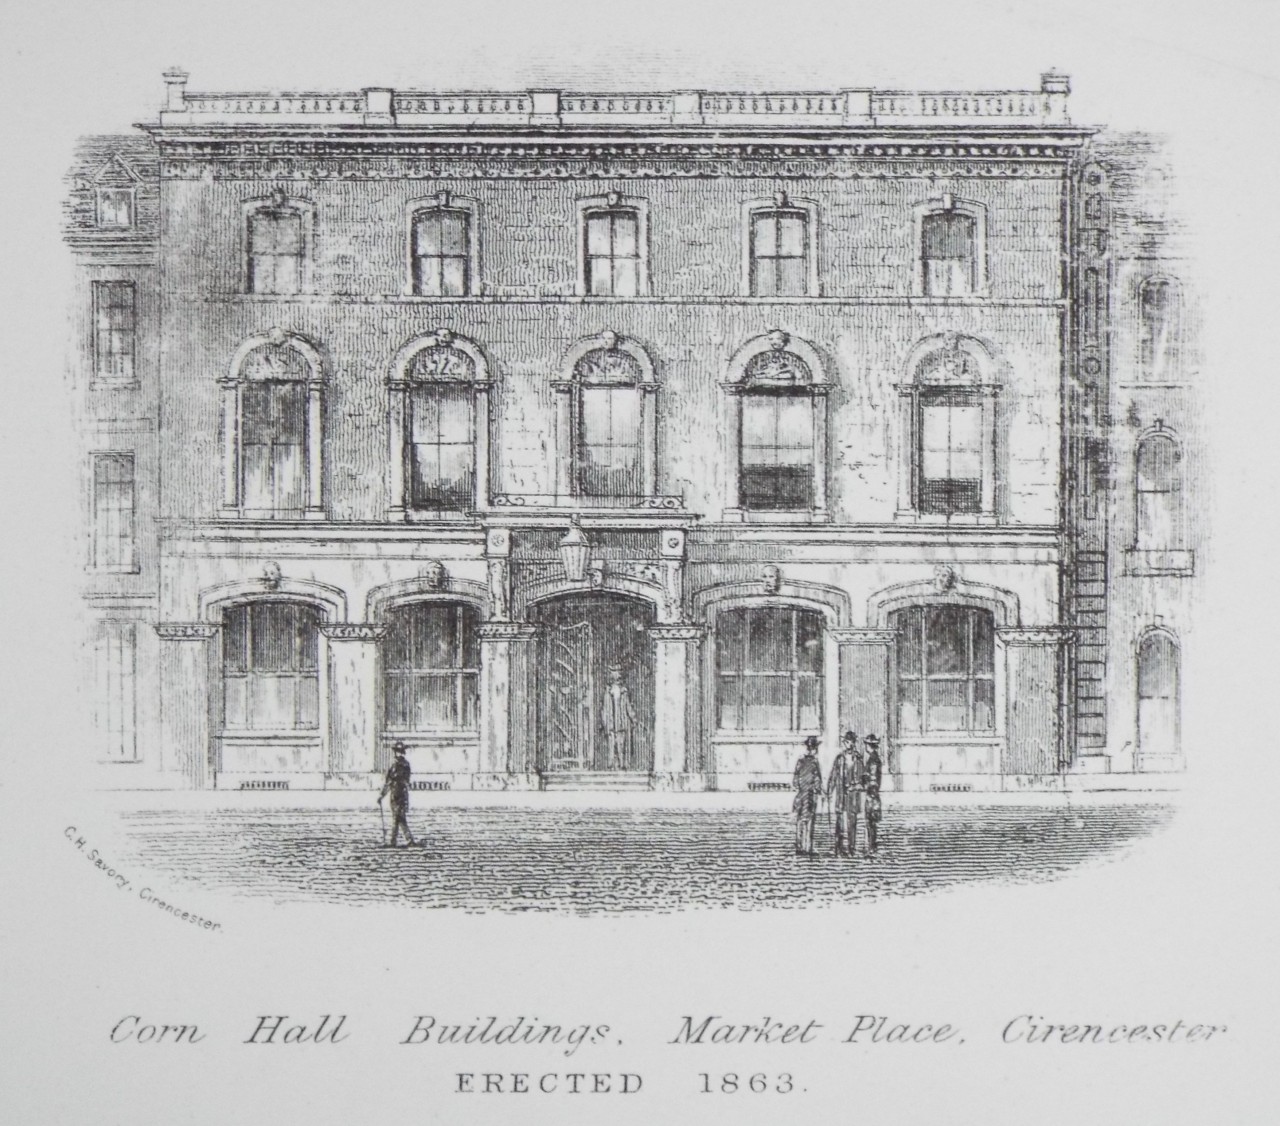 Steel Vignette - Corn Hall Buildings, Market Place, Cirencester Erected 1863.